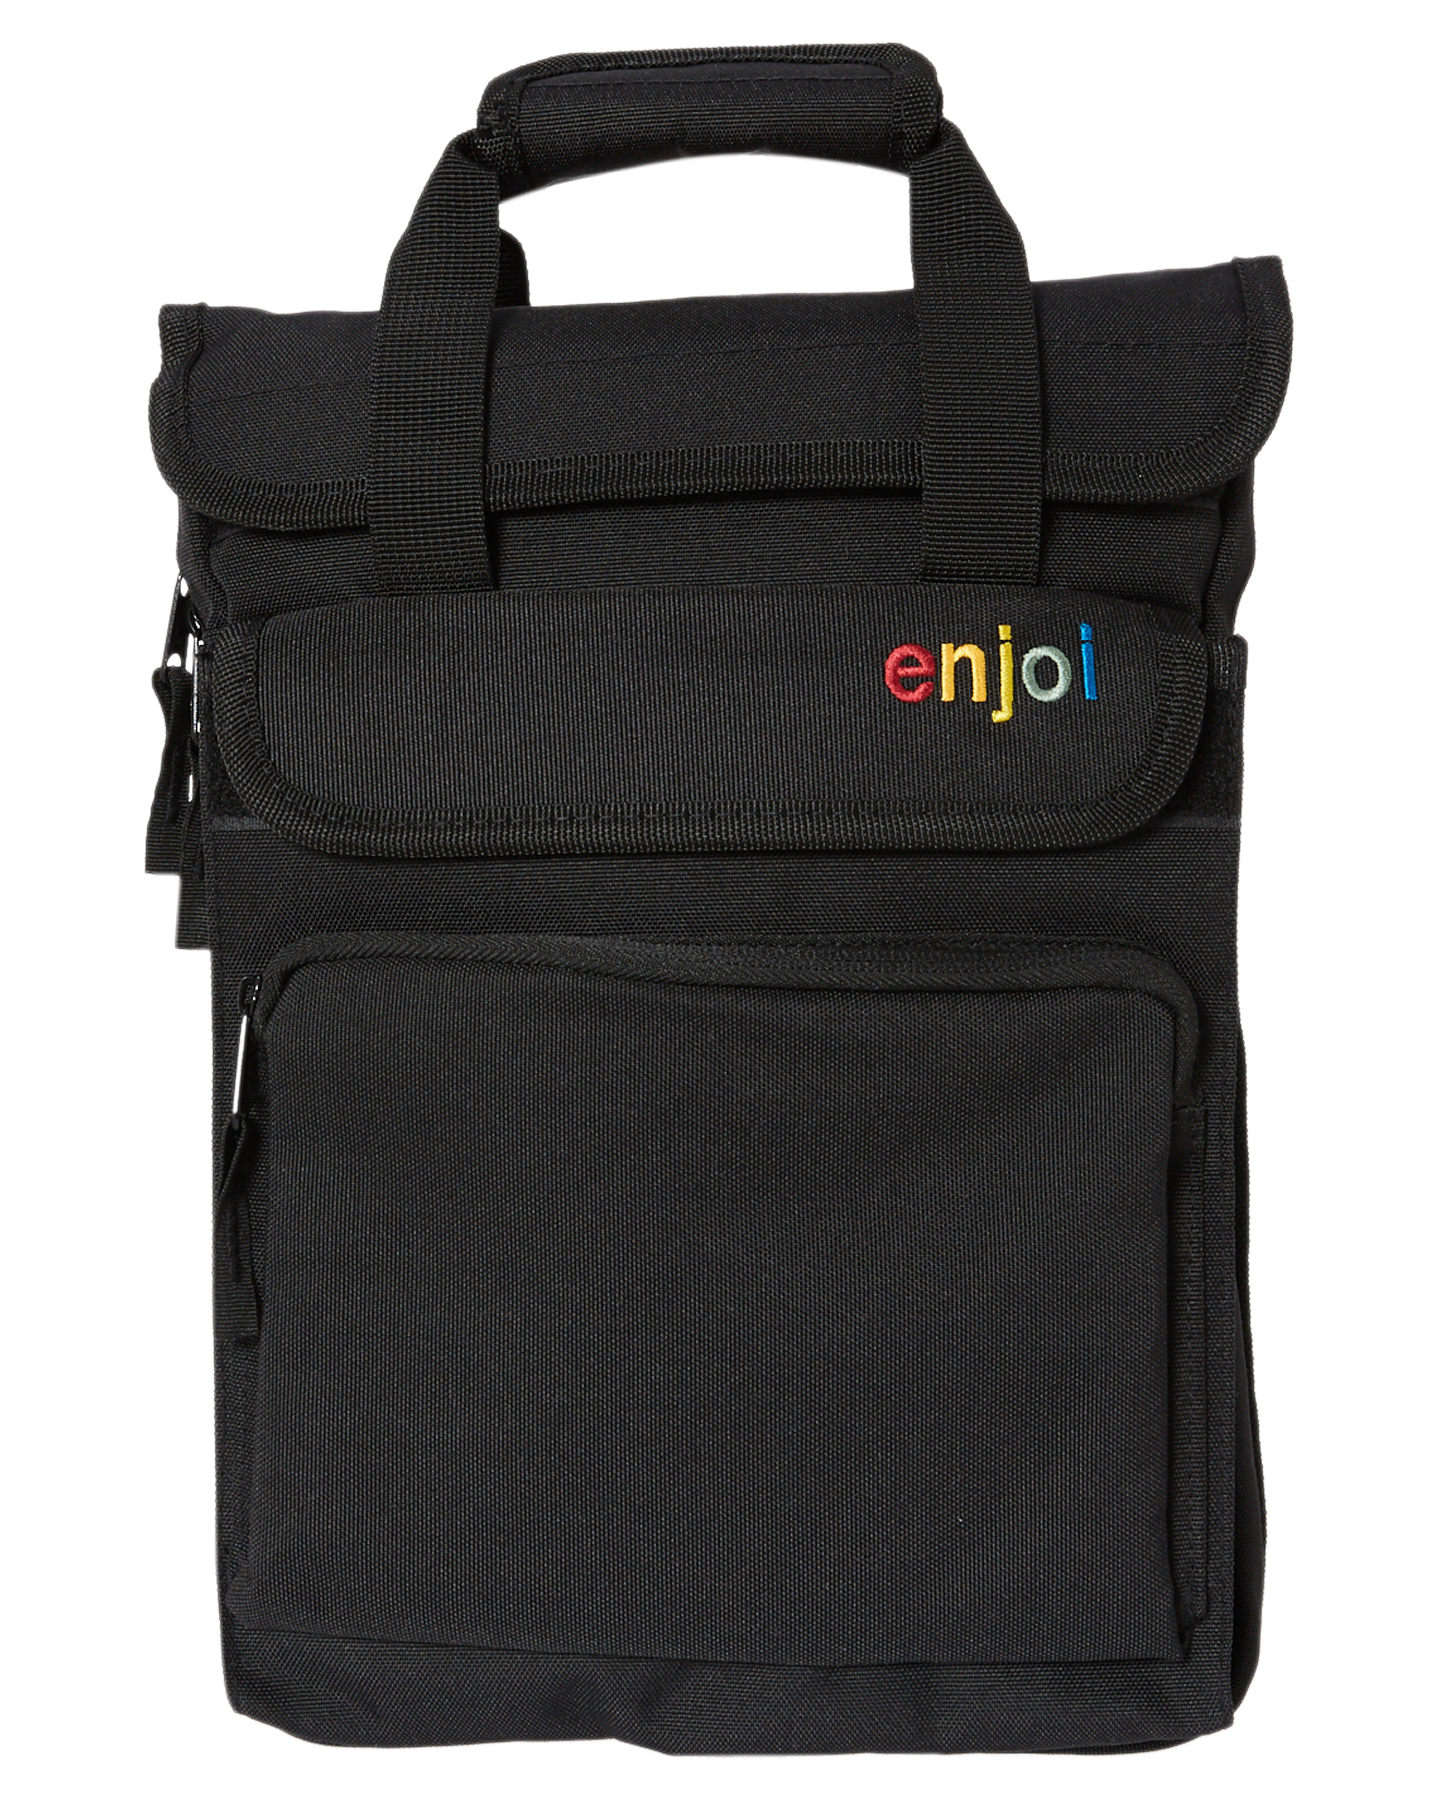 Enjoi Field Bag - Black | SurfStitch